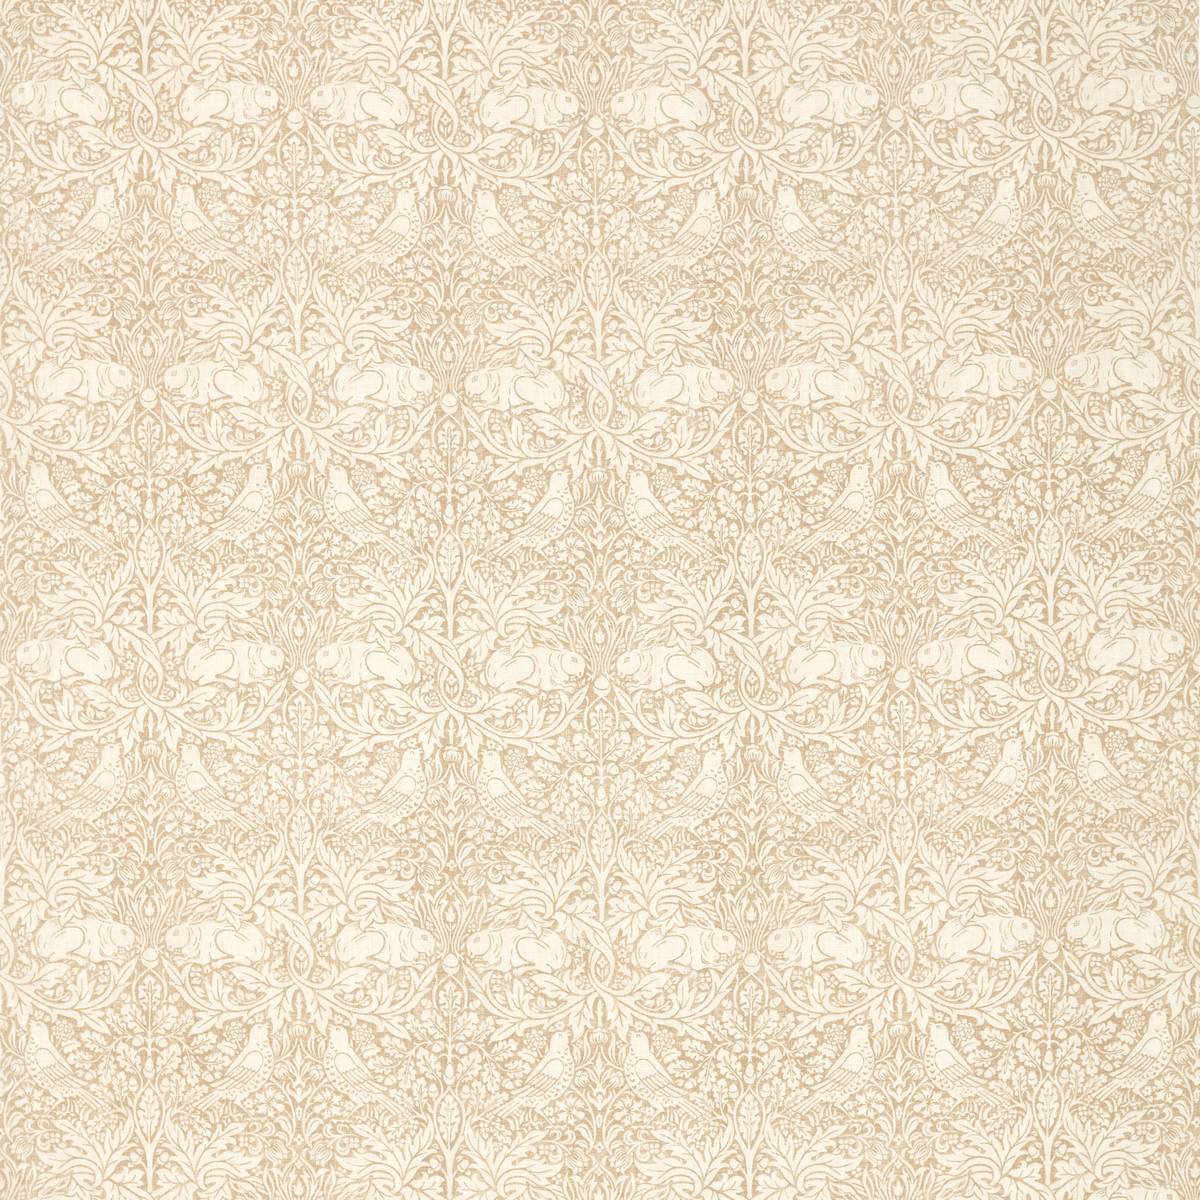 Pure Brer Rabbit Print Flax Fabric by William Morris & Co. - Britannia Rose